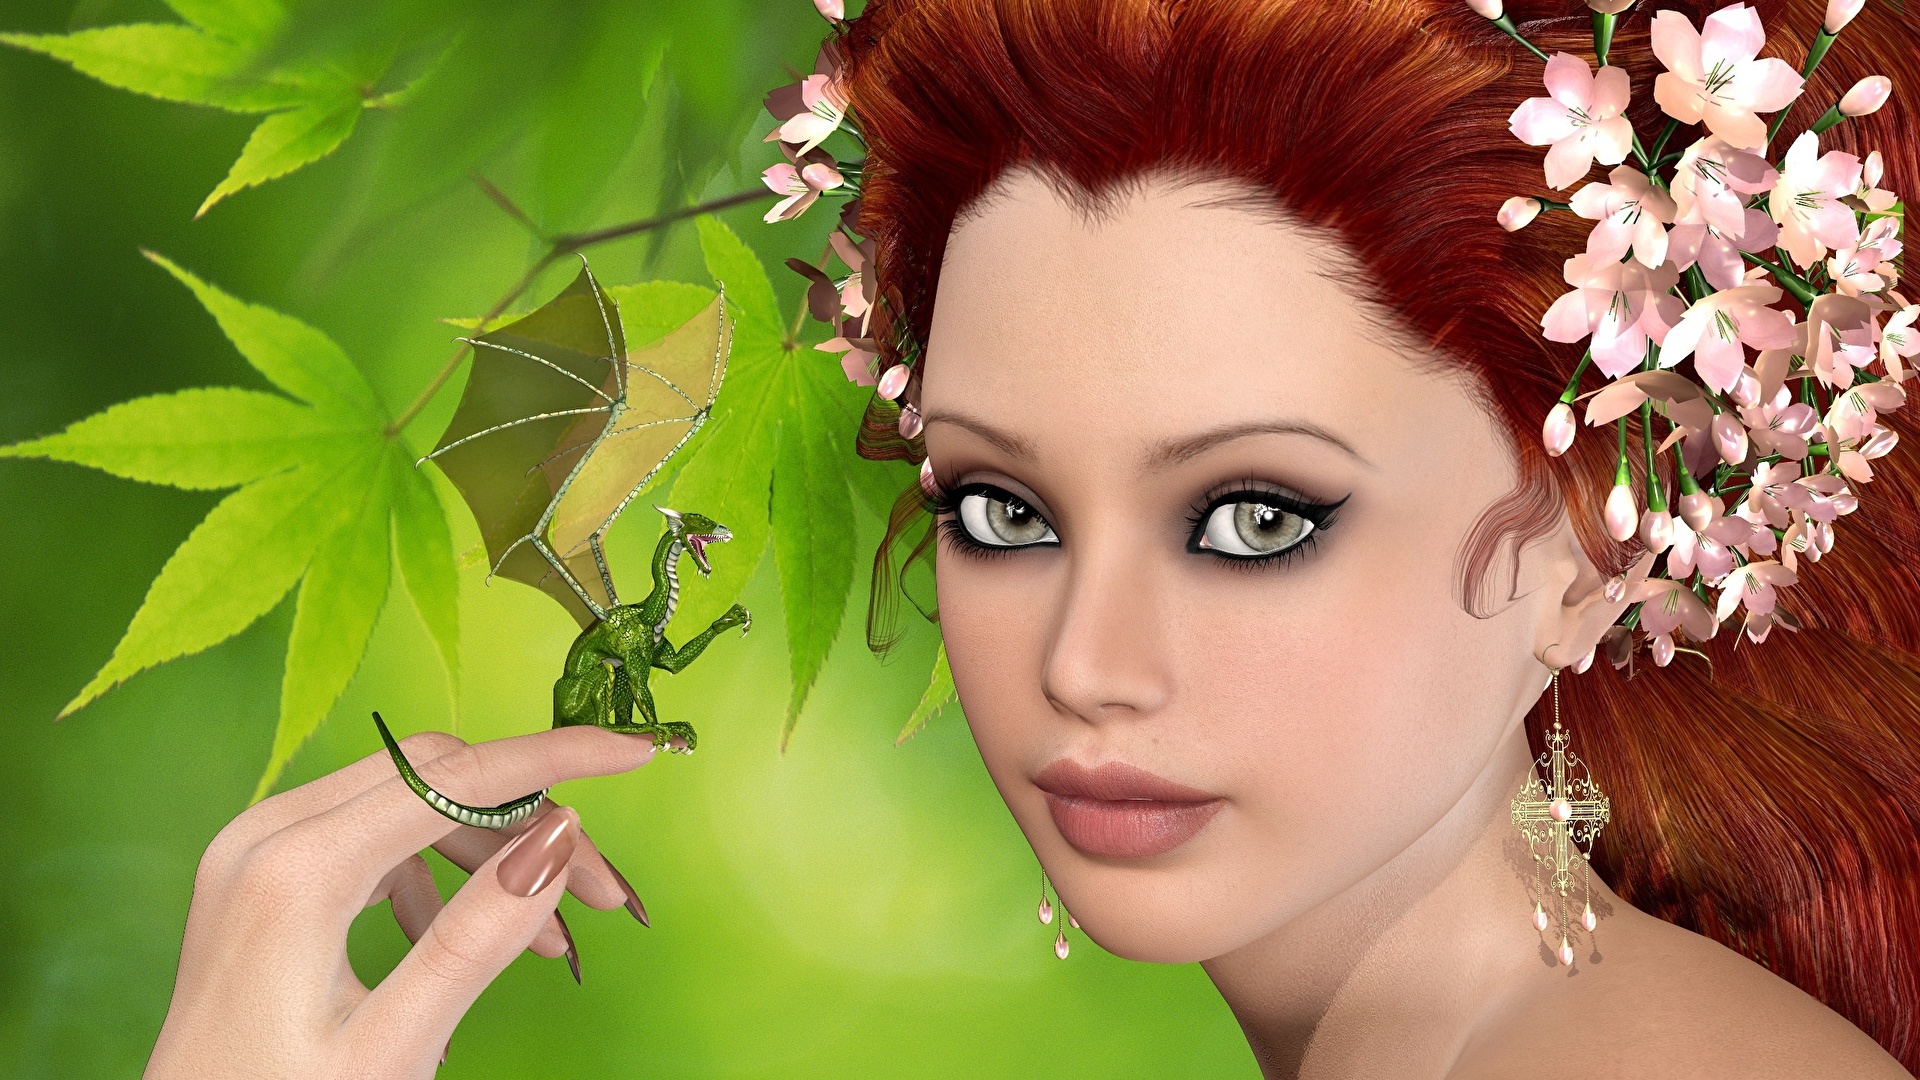 Desktop Wallpapers Dragons Redhead Girl Face Fantasy 3d 1920x1080